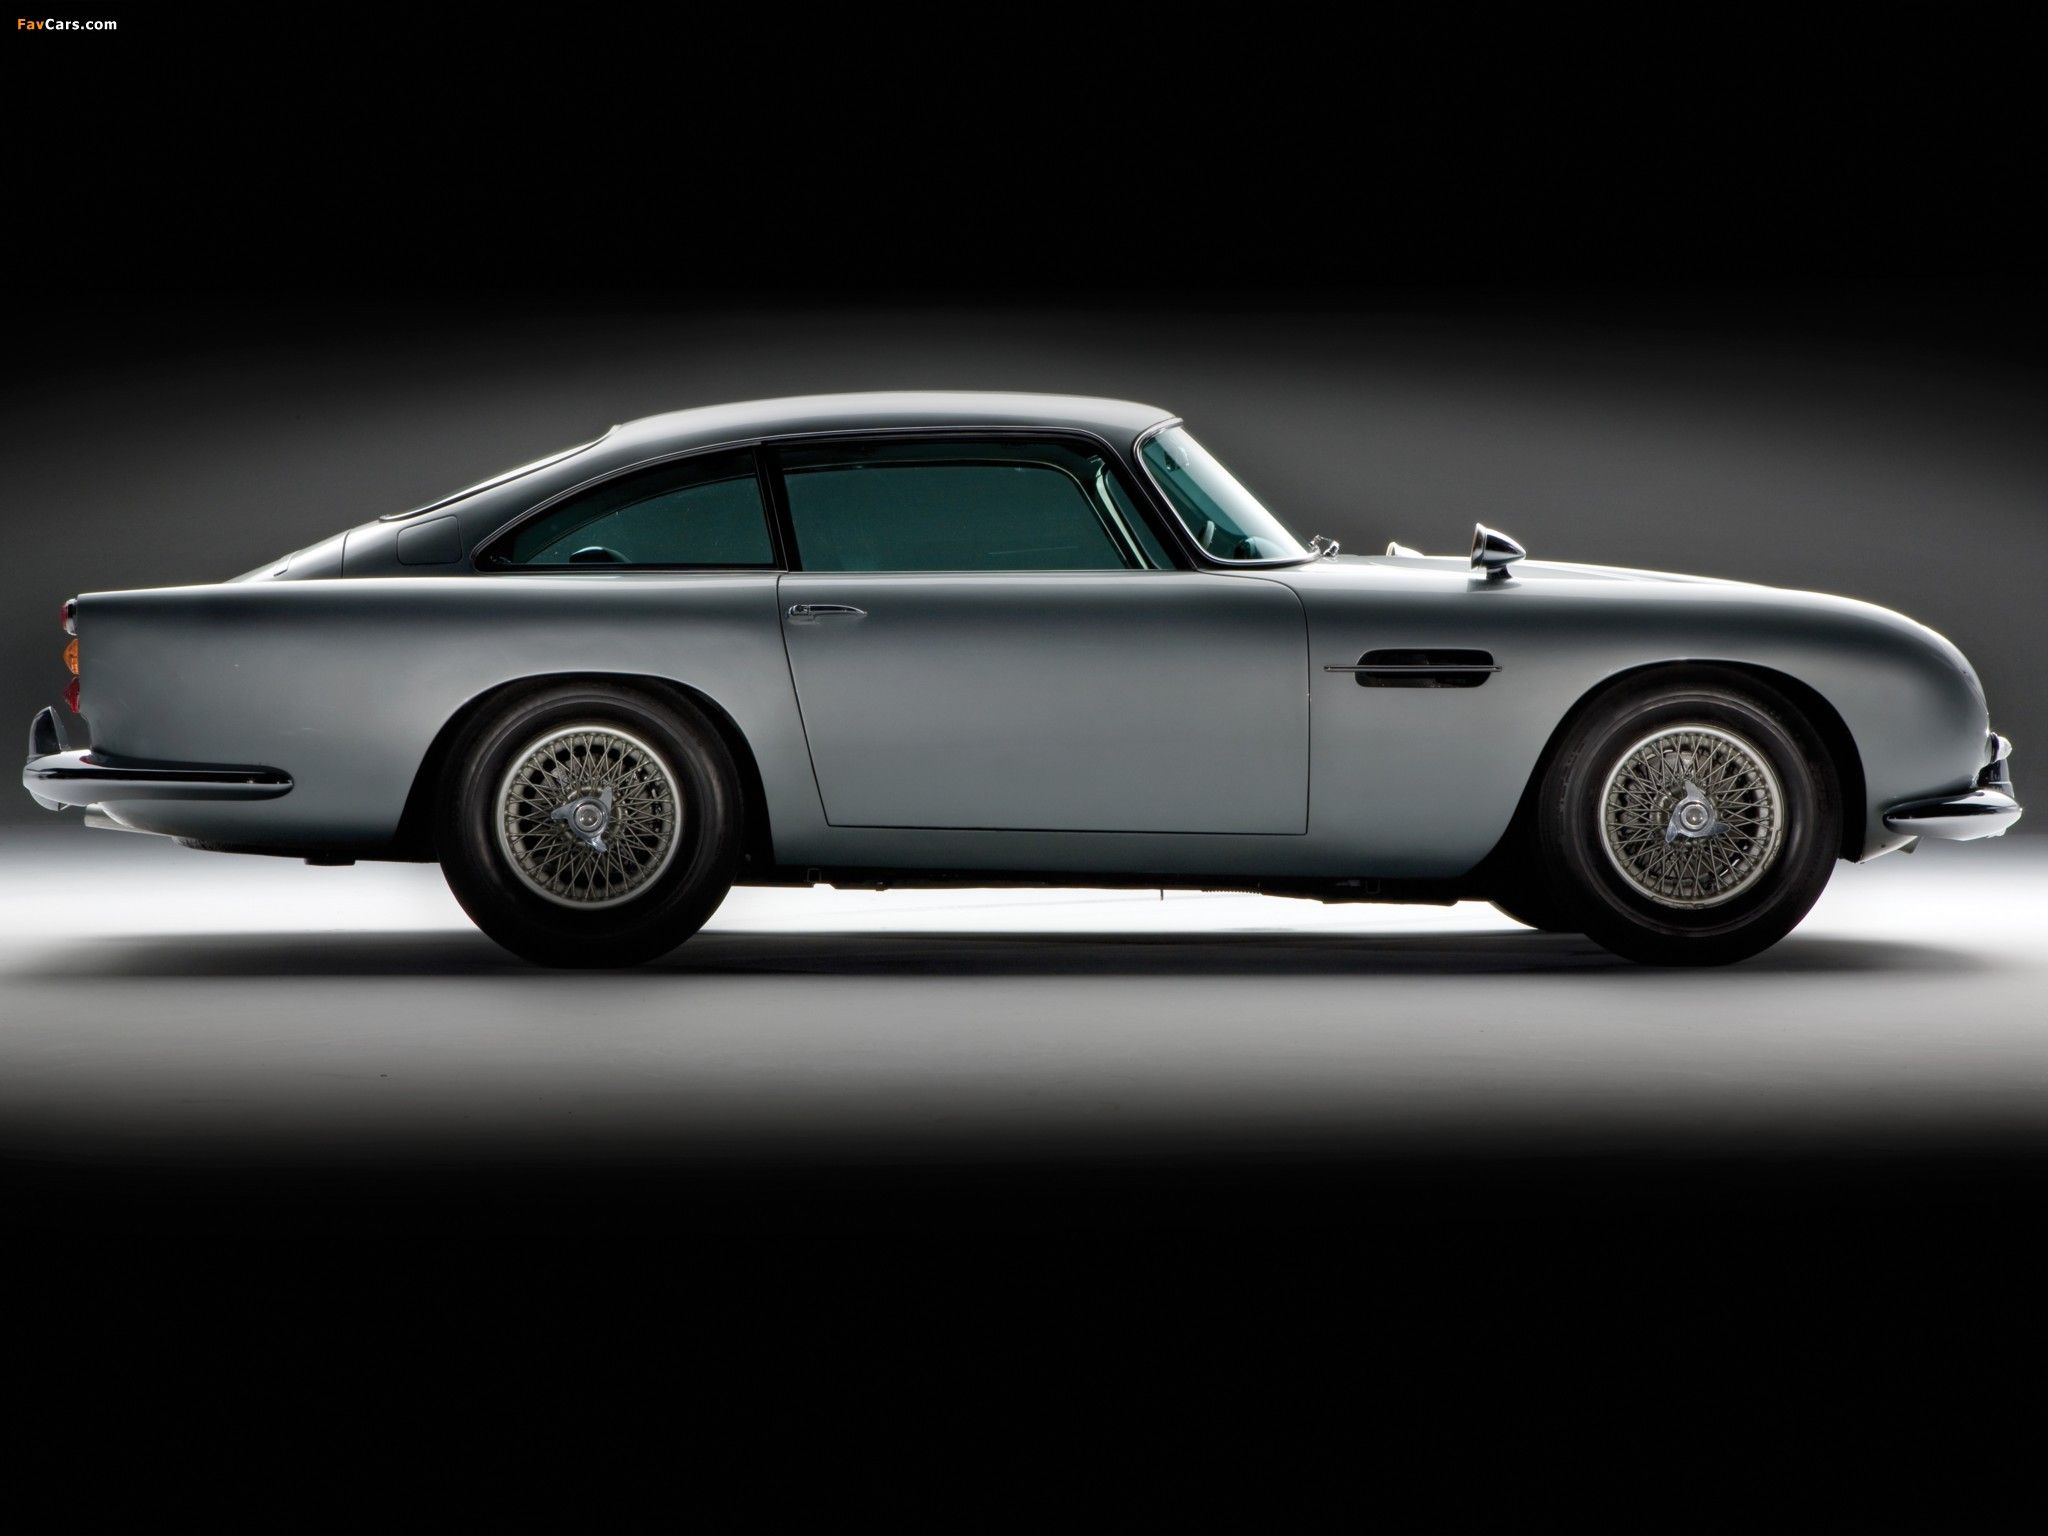 James Bond Aston Martin DB5 Wallpaper - image #71